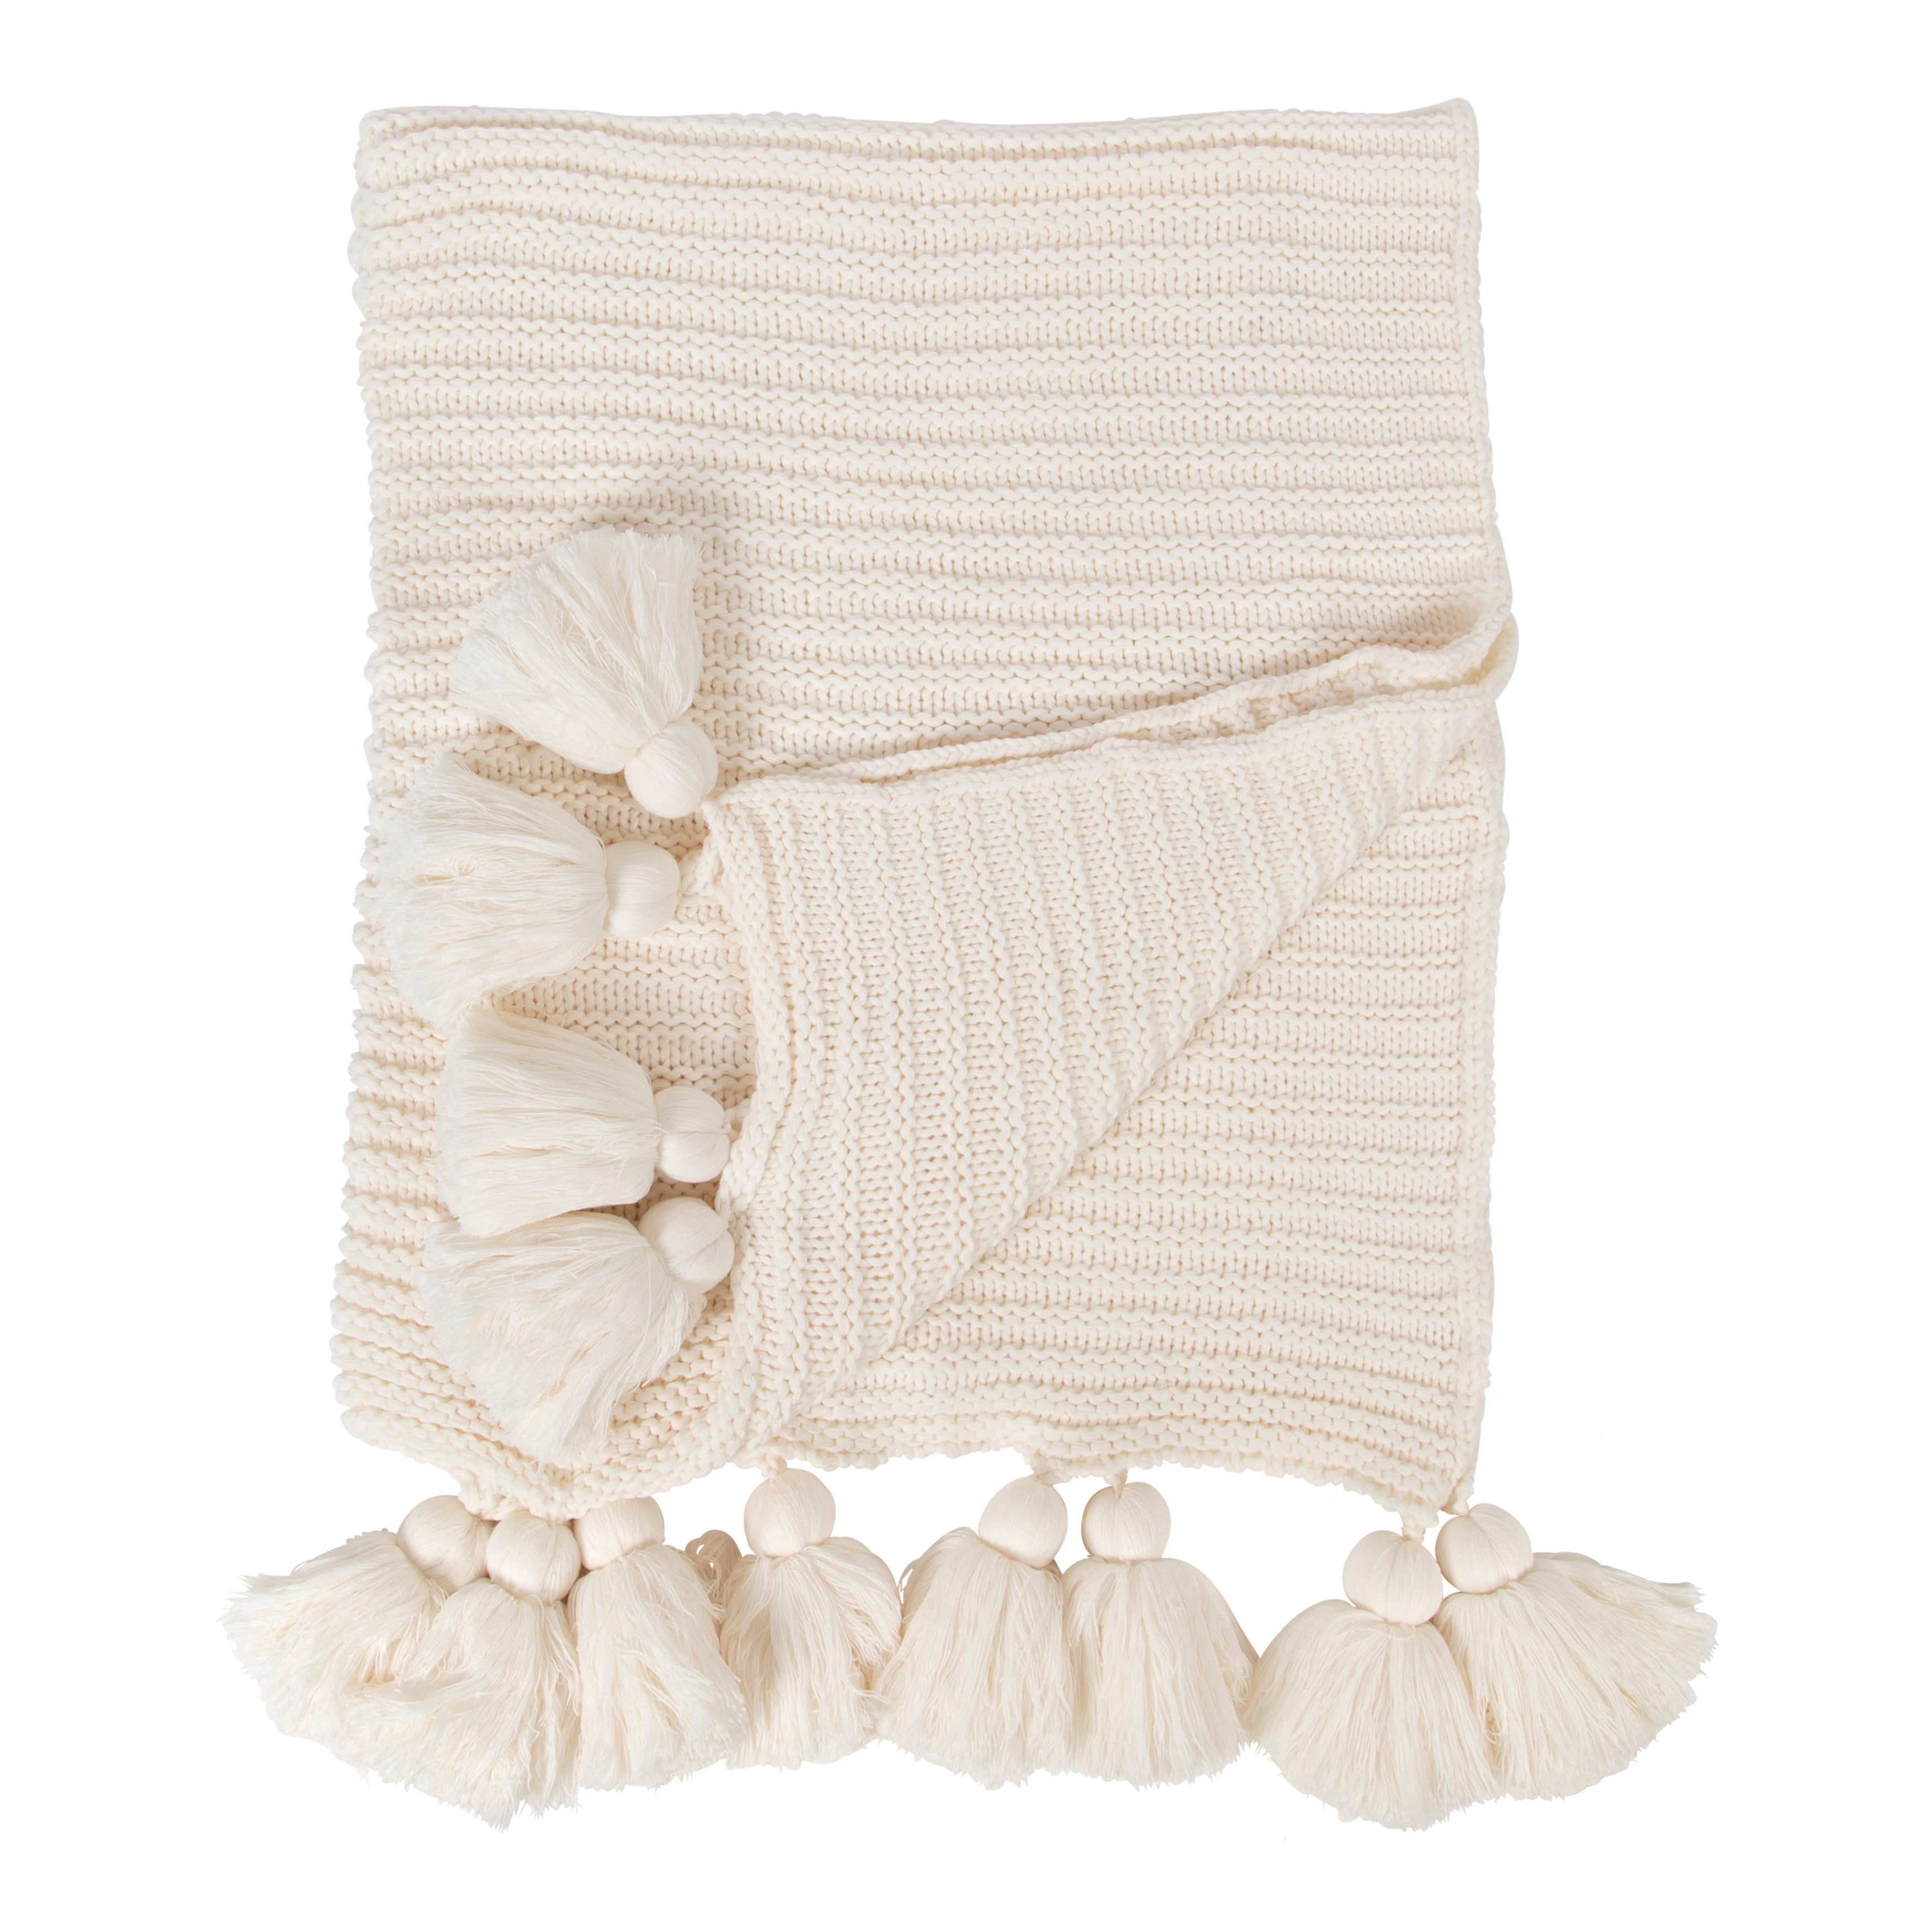 Handmade Chunky Knit Blanket Wool Acrylic Throw Smoky Blue 50 x 70 Boho Bedroom Home Decor Woven St 